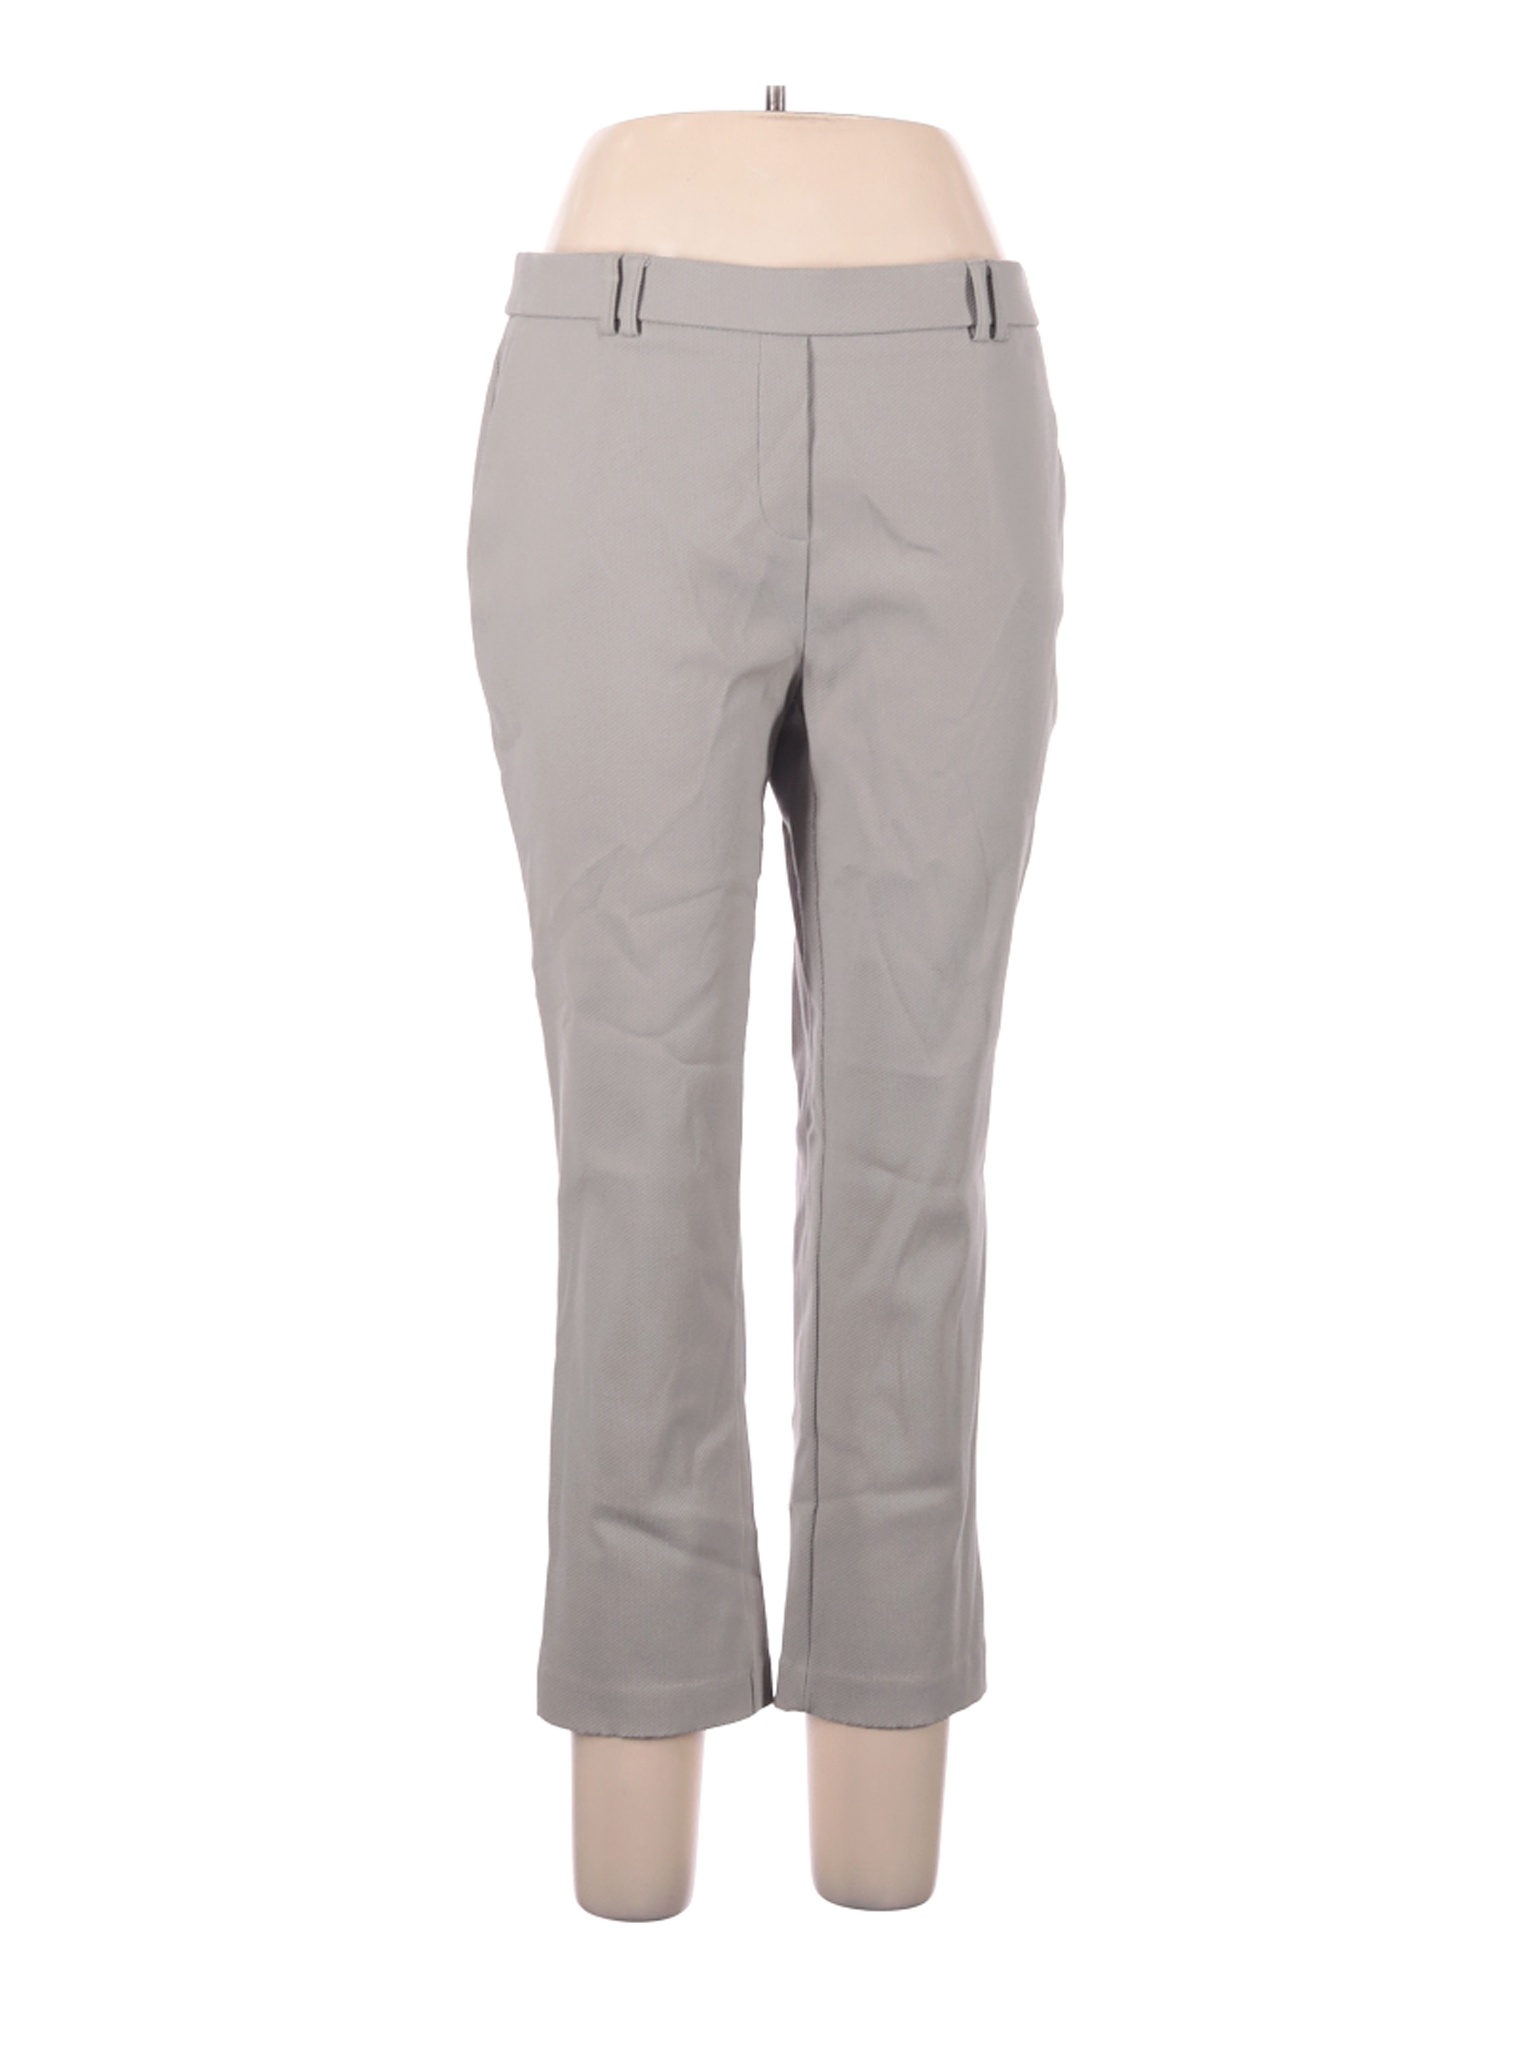 Jules & Leopold Women Gray Dress Pants L | eBay